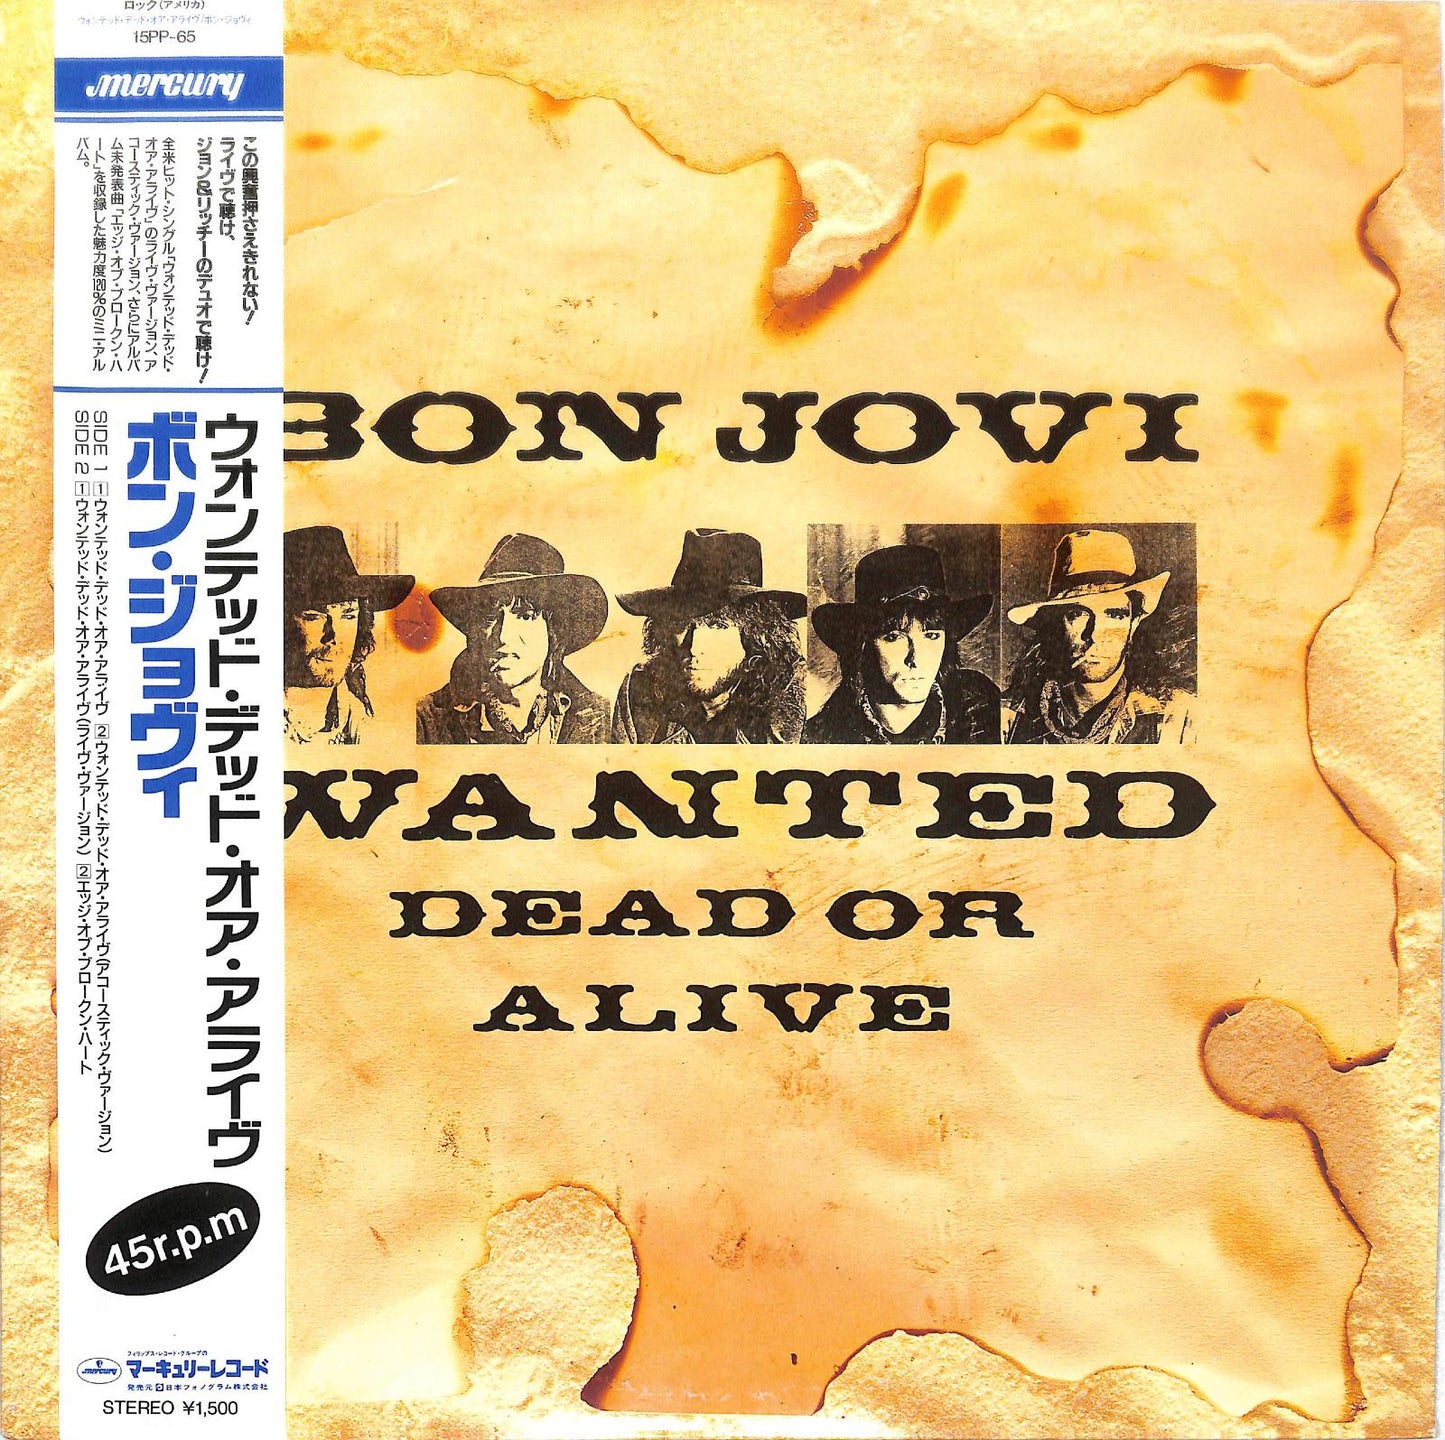 BON JOVI - Wanted Dead Or Alive